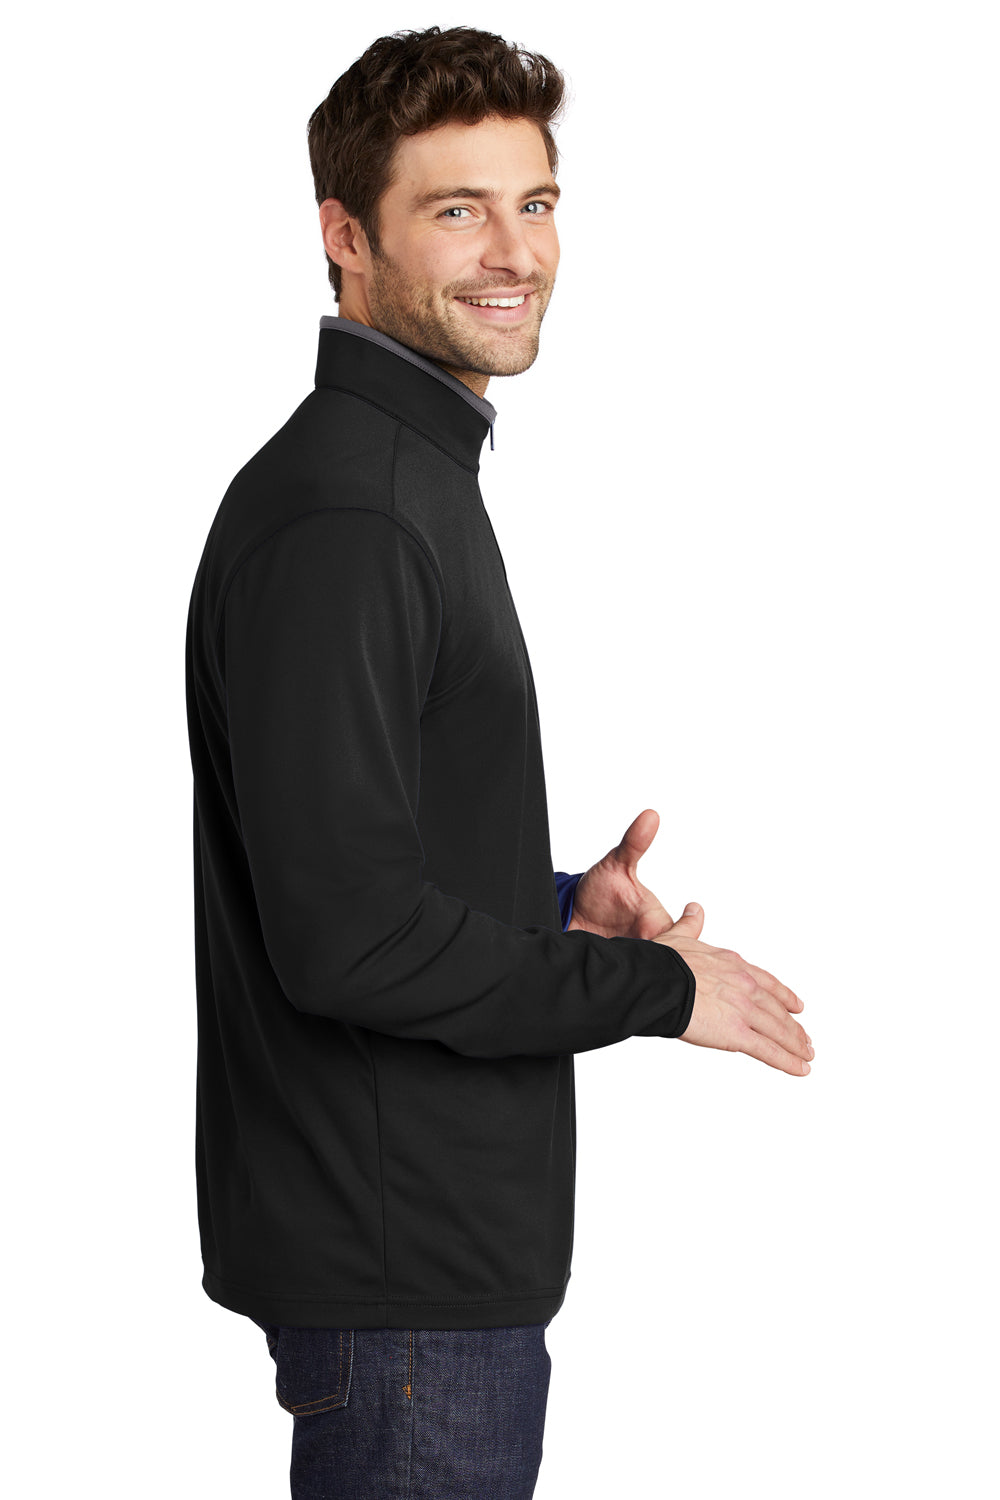 Port Authority Mens Performance Silk Touch 1/4 Zip Sweatshirt Black/Steel Grey Side